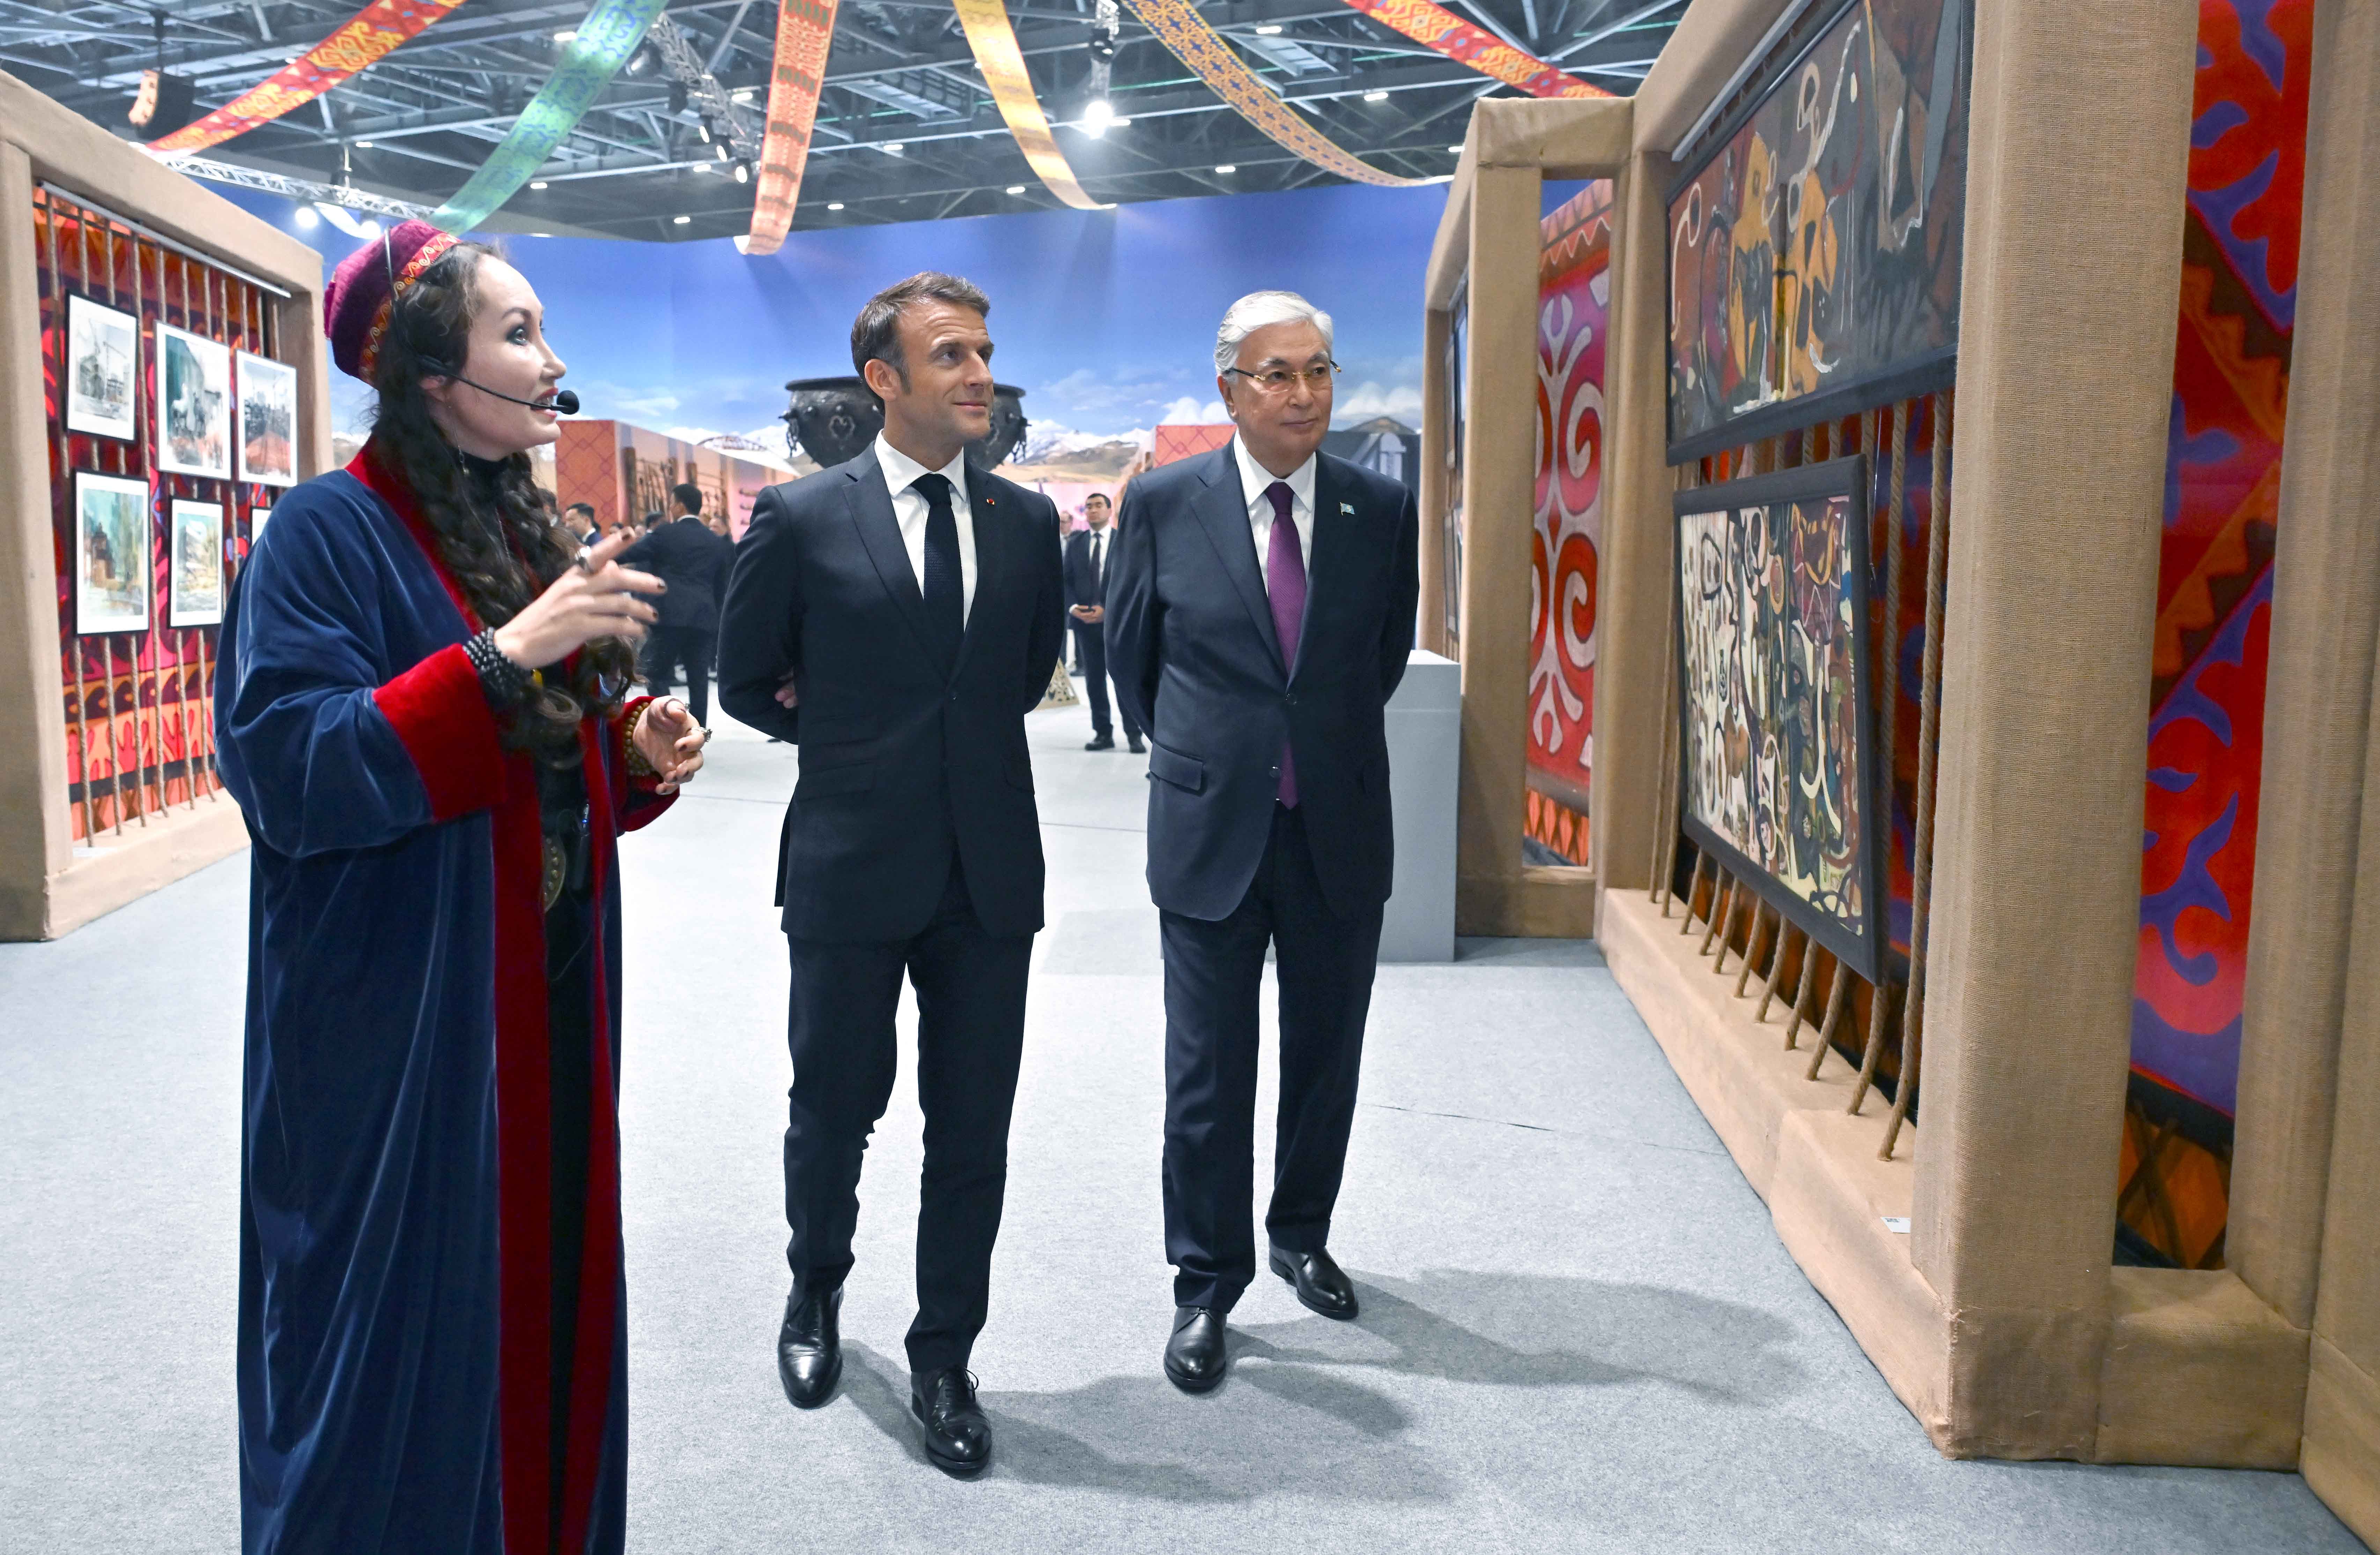 Presidents Kassym-Jomart Tokayev and Emmanuel Macron explore Kazakh culture at "Ethnoaul" exhibition 